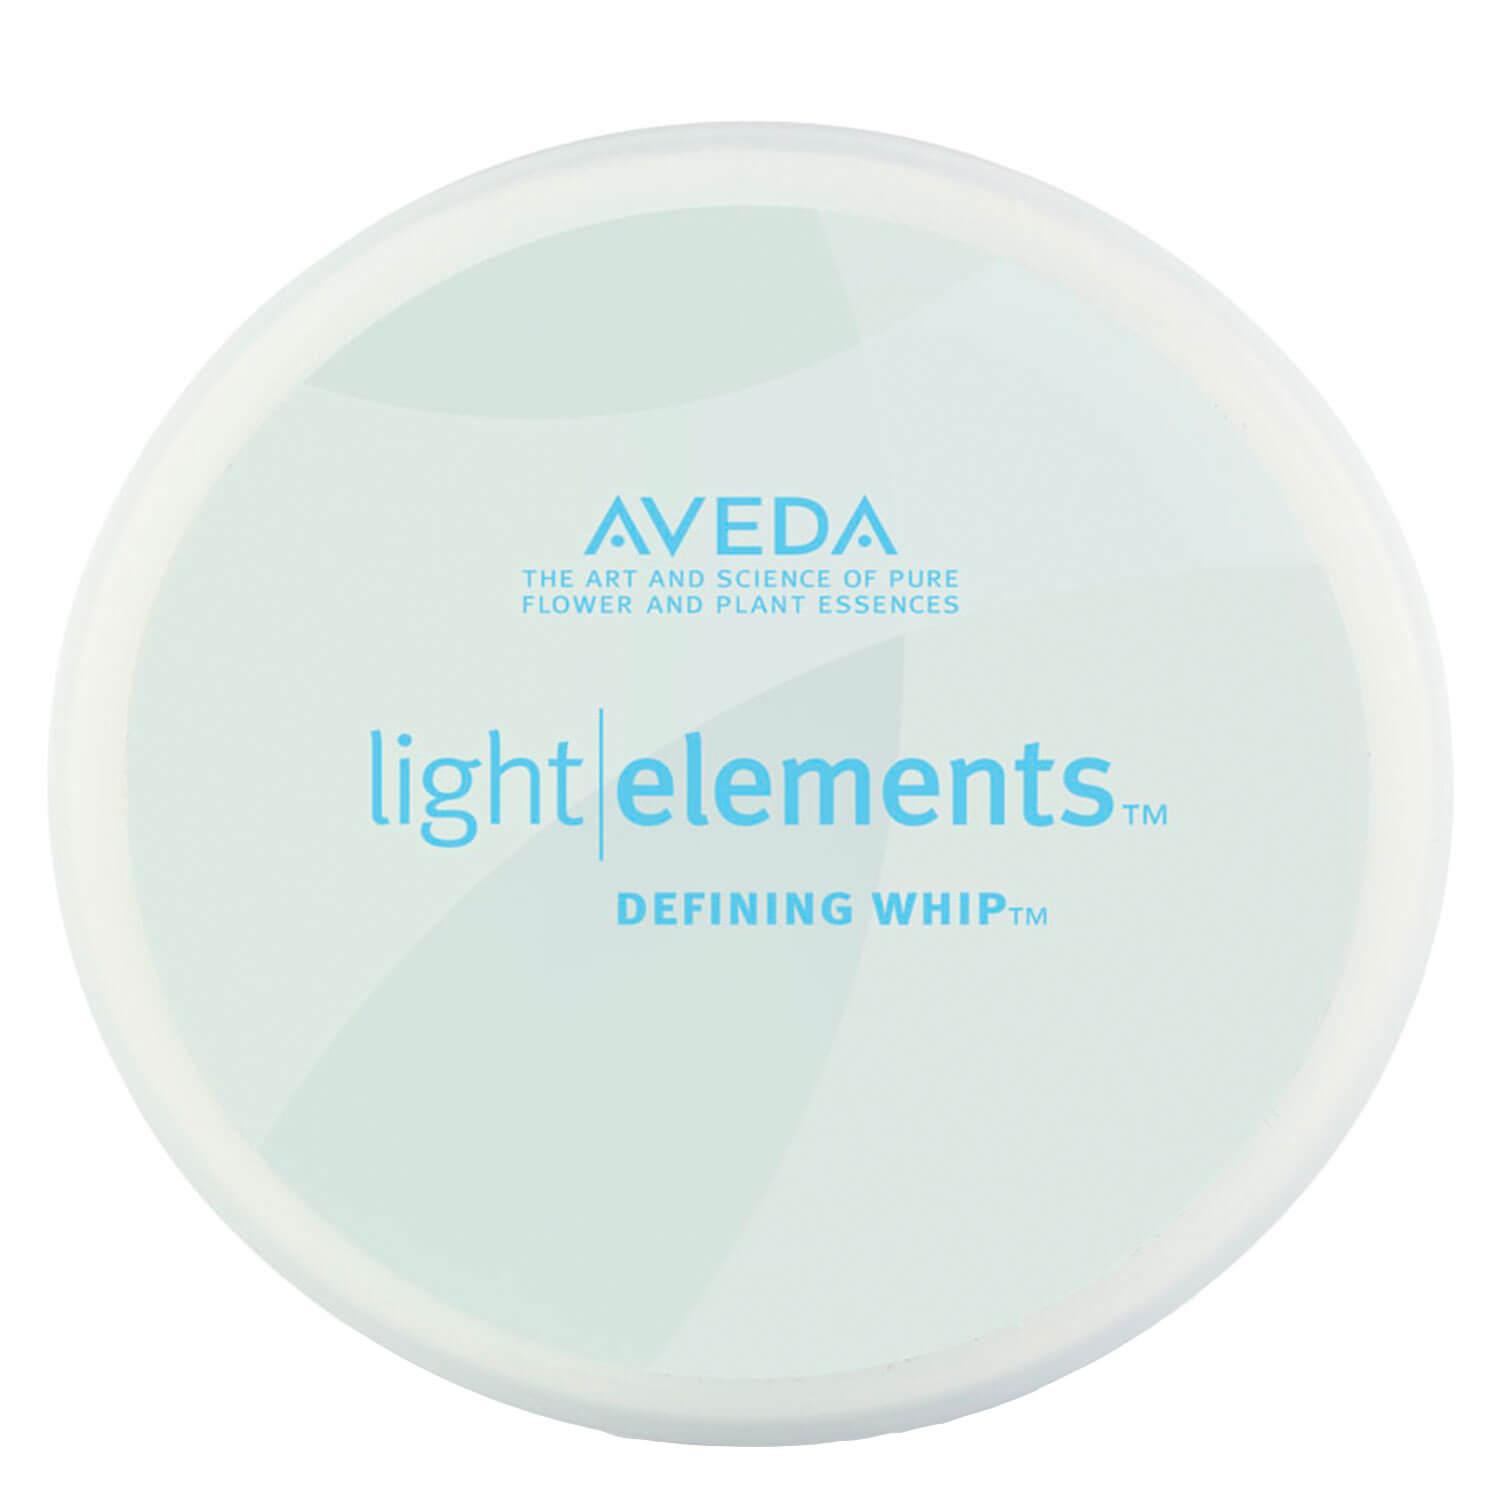 light elements - defining whip